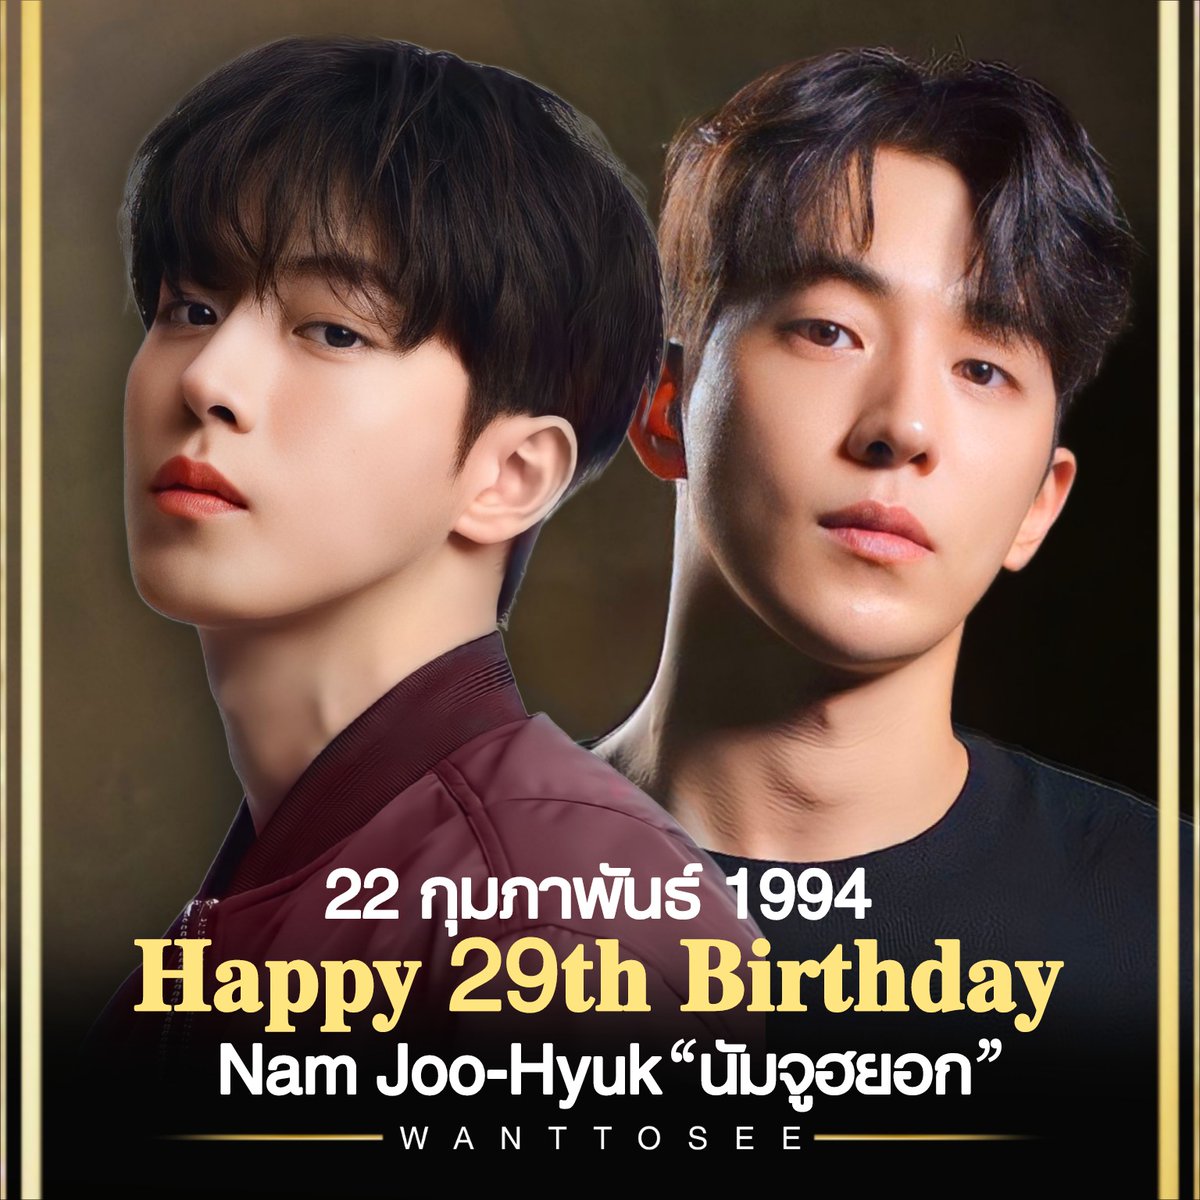 Happy 29th Birthday, Nam Joo-Hyuk
สุขสันต์วันเกิดปีที่ 29 ให้กับ 'นัมจูฮยอก'
22 กุมภาพันธ์ 1994

#HappyNamJoohyukDay #NamJooHyuk
#WANTTOSEE